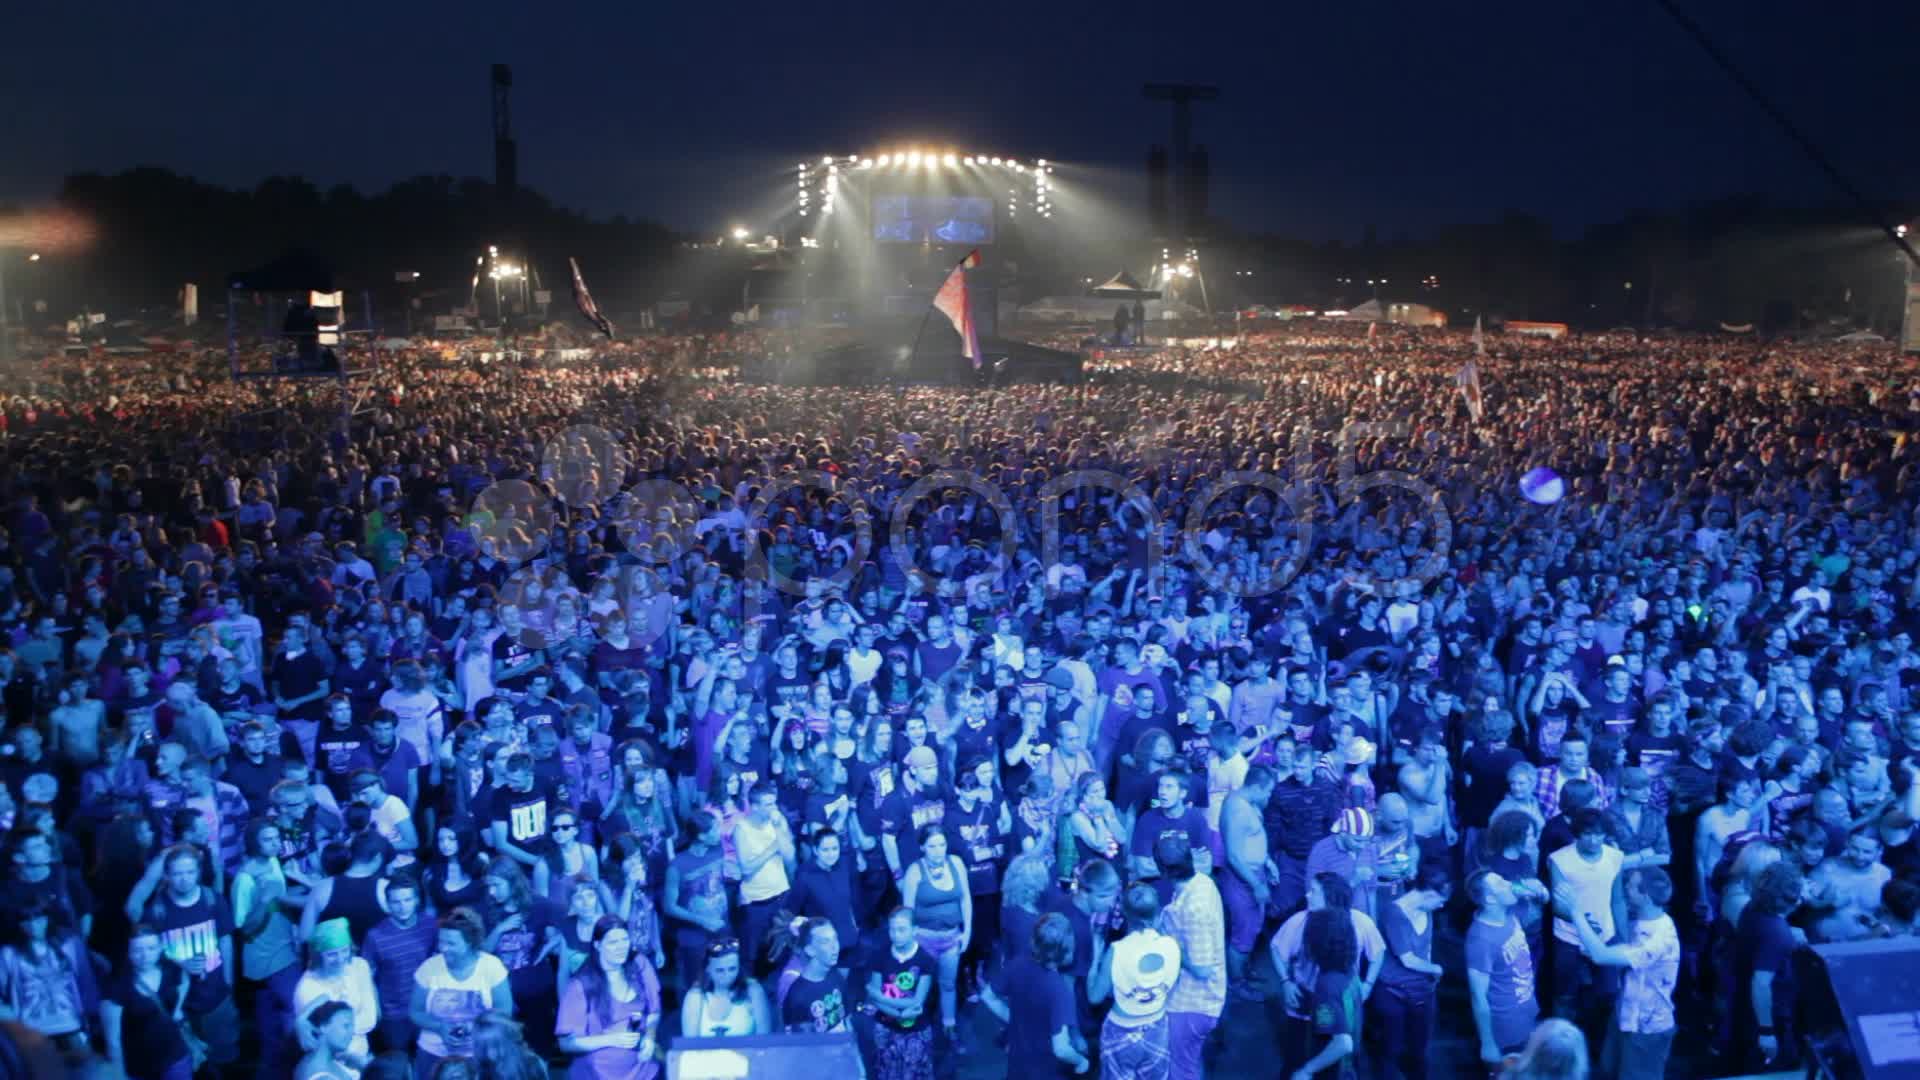 Concert Crowd Background